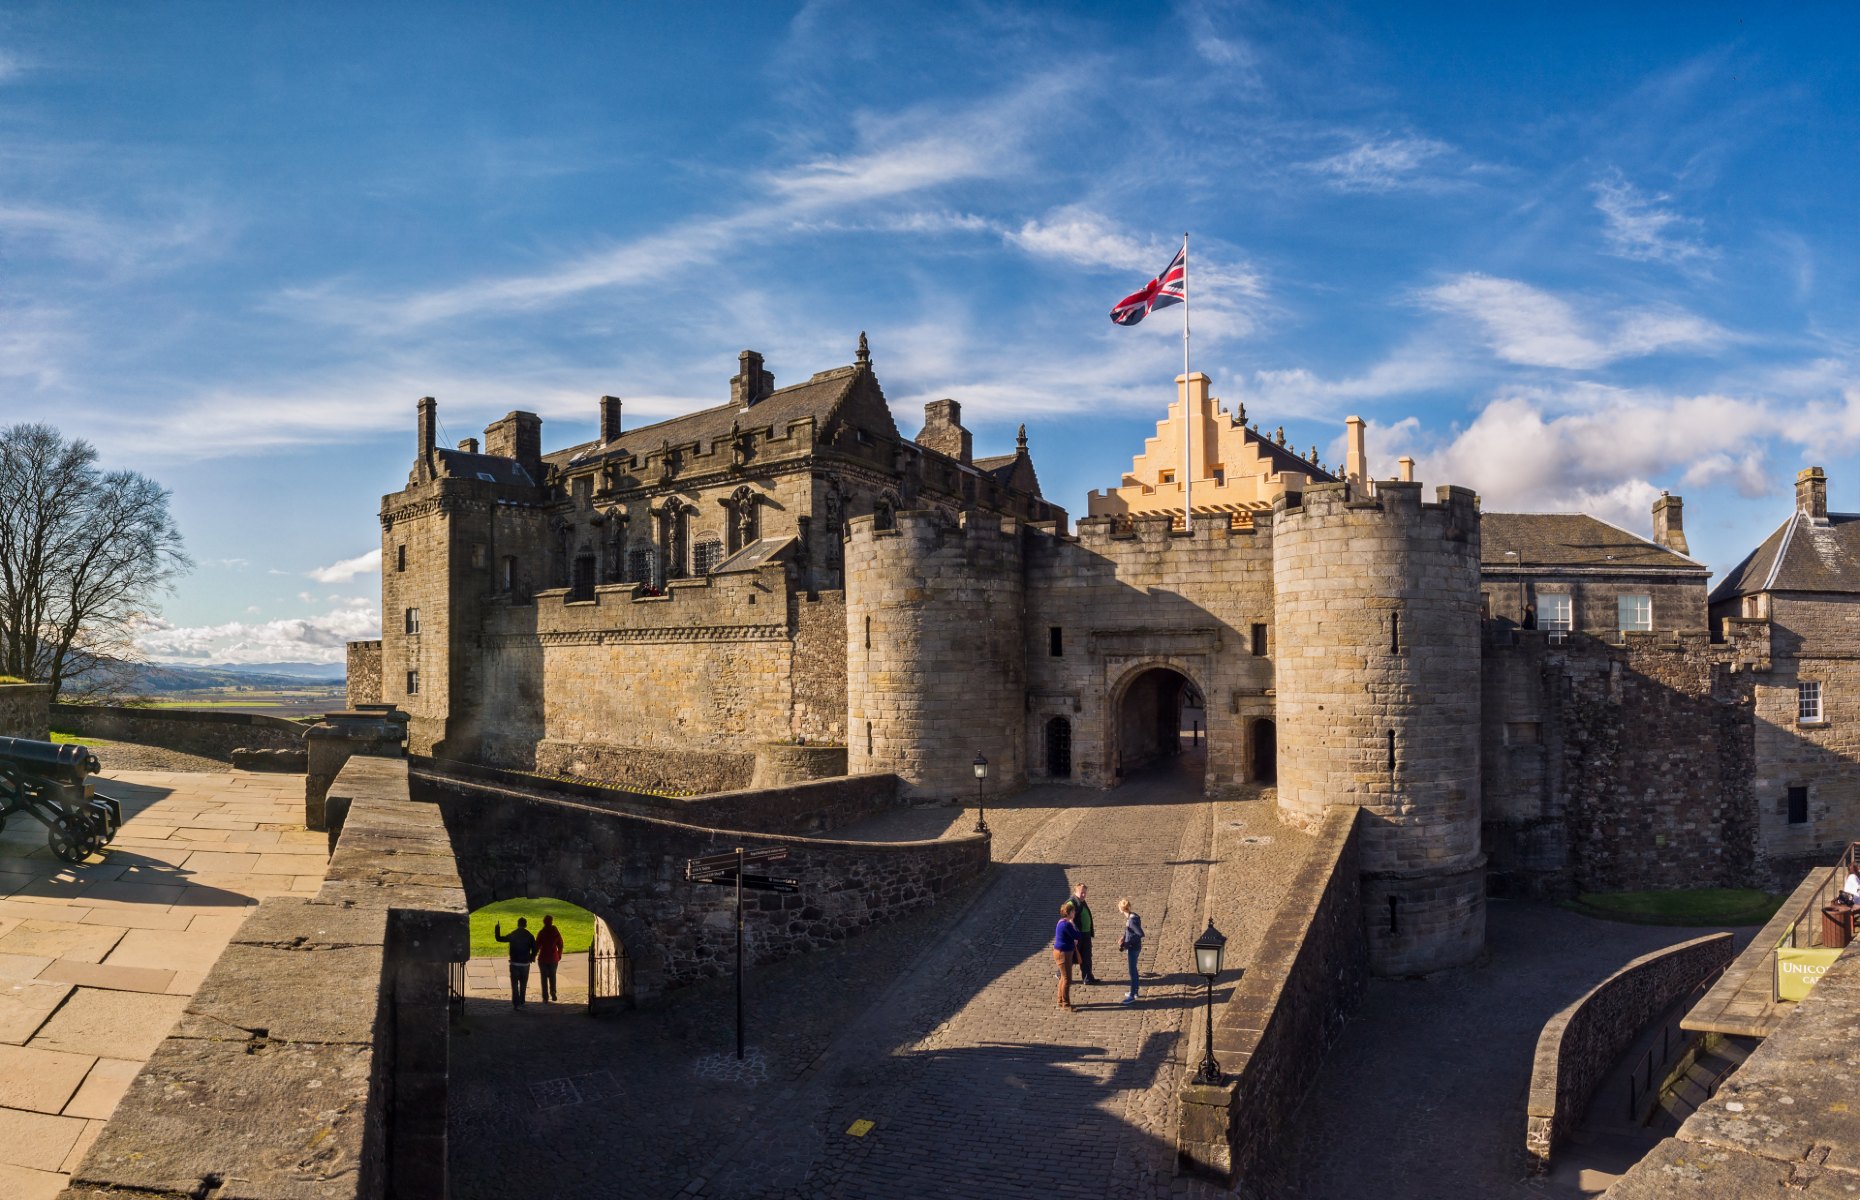 Stirling Castle up close (Image: Ulmus Media/Shutterstock)